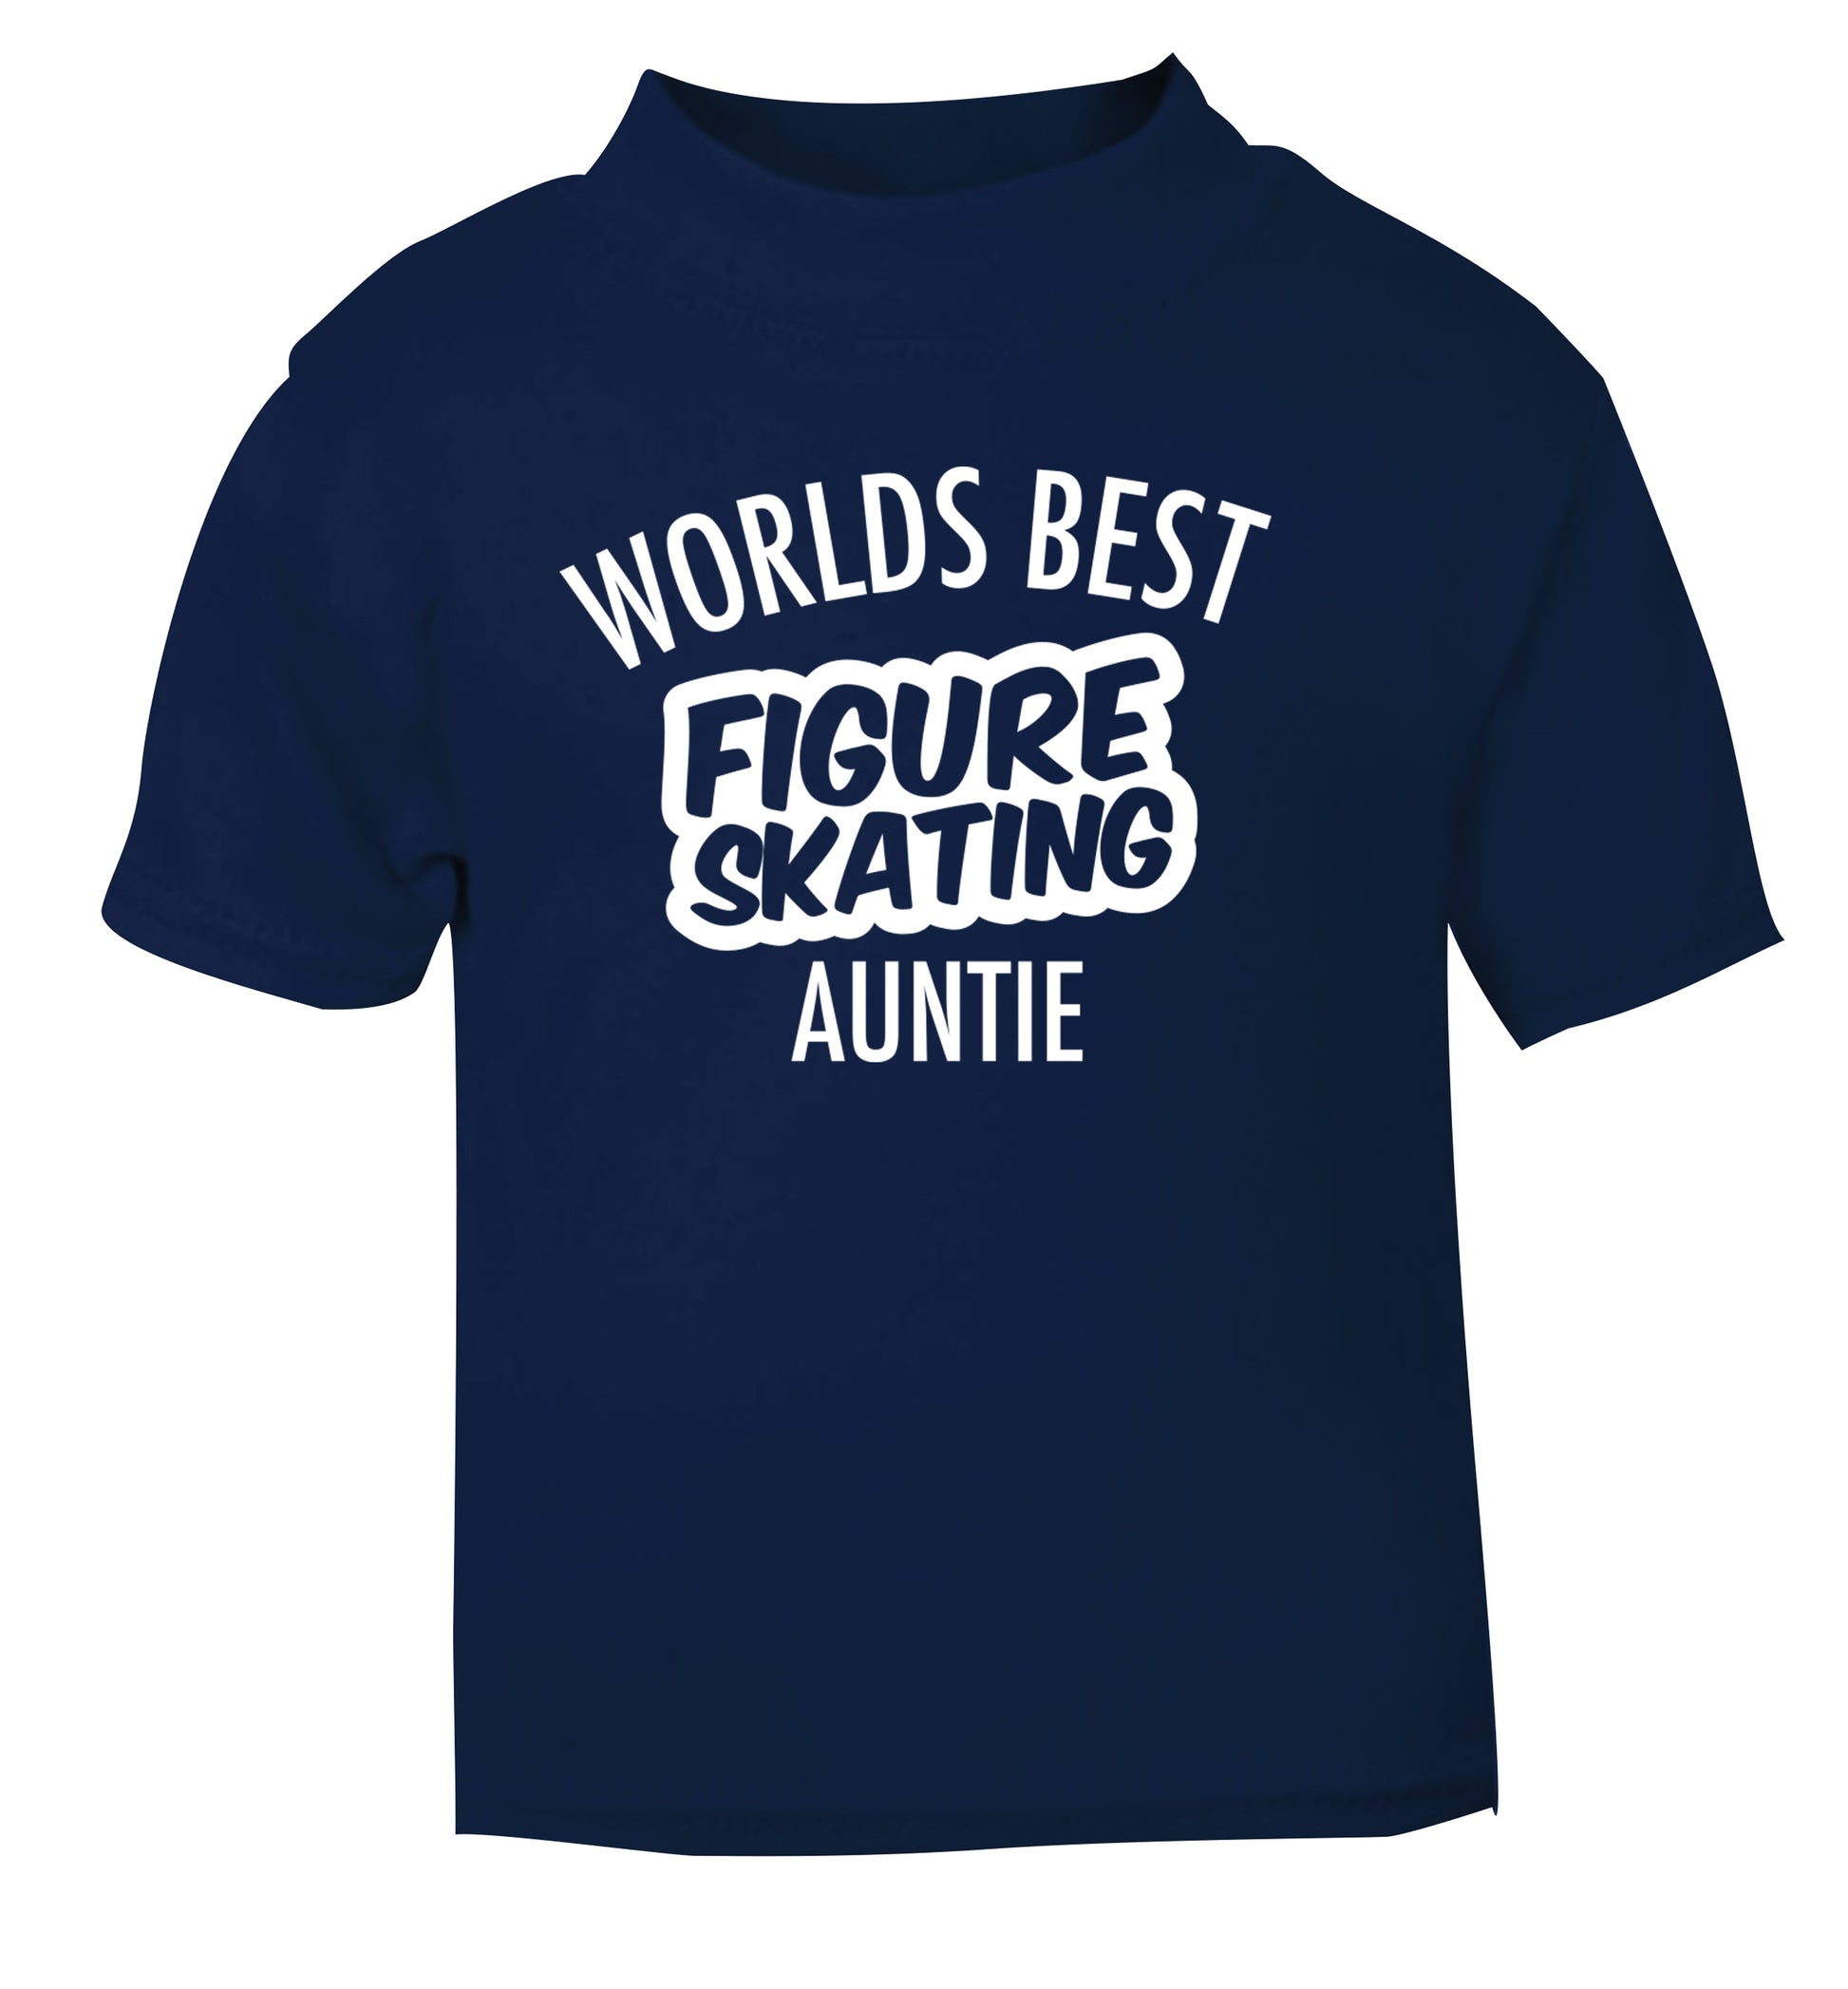 Worlds best figure skating auntie navy Baby Toddler Tshirt 2 Years